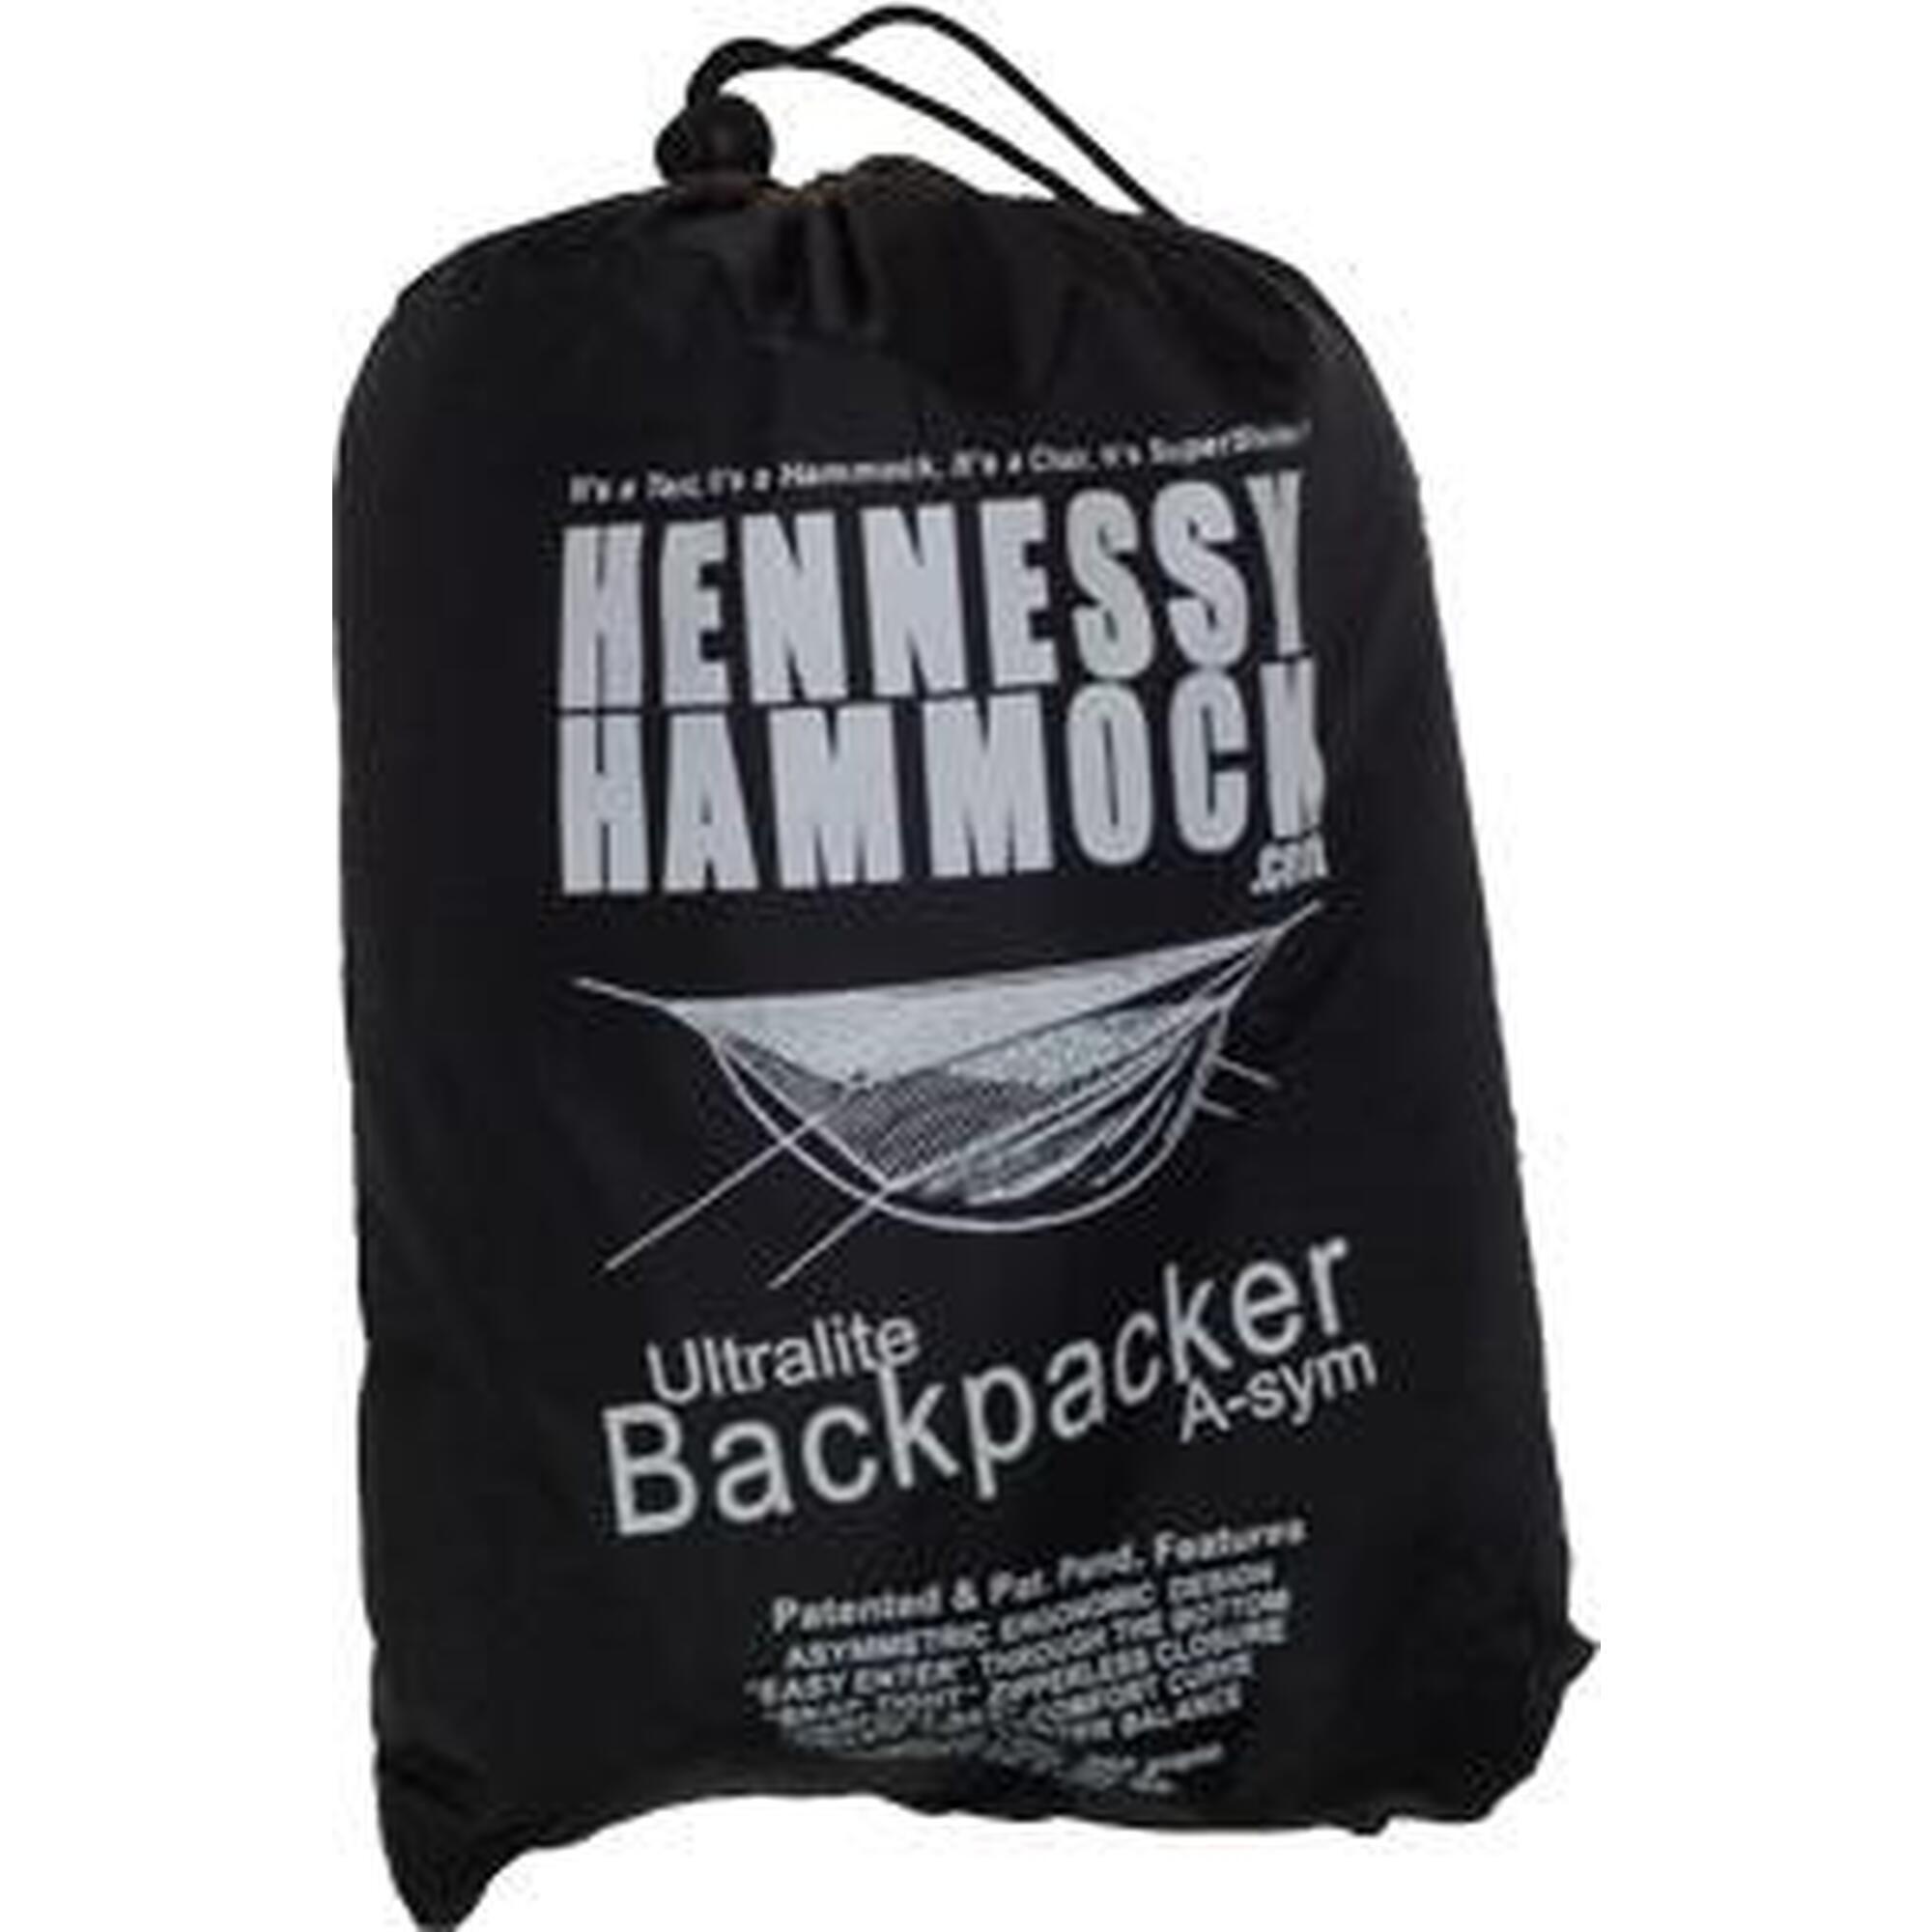 Hennessy Hammock Ultralite Backpacker Classic